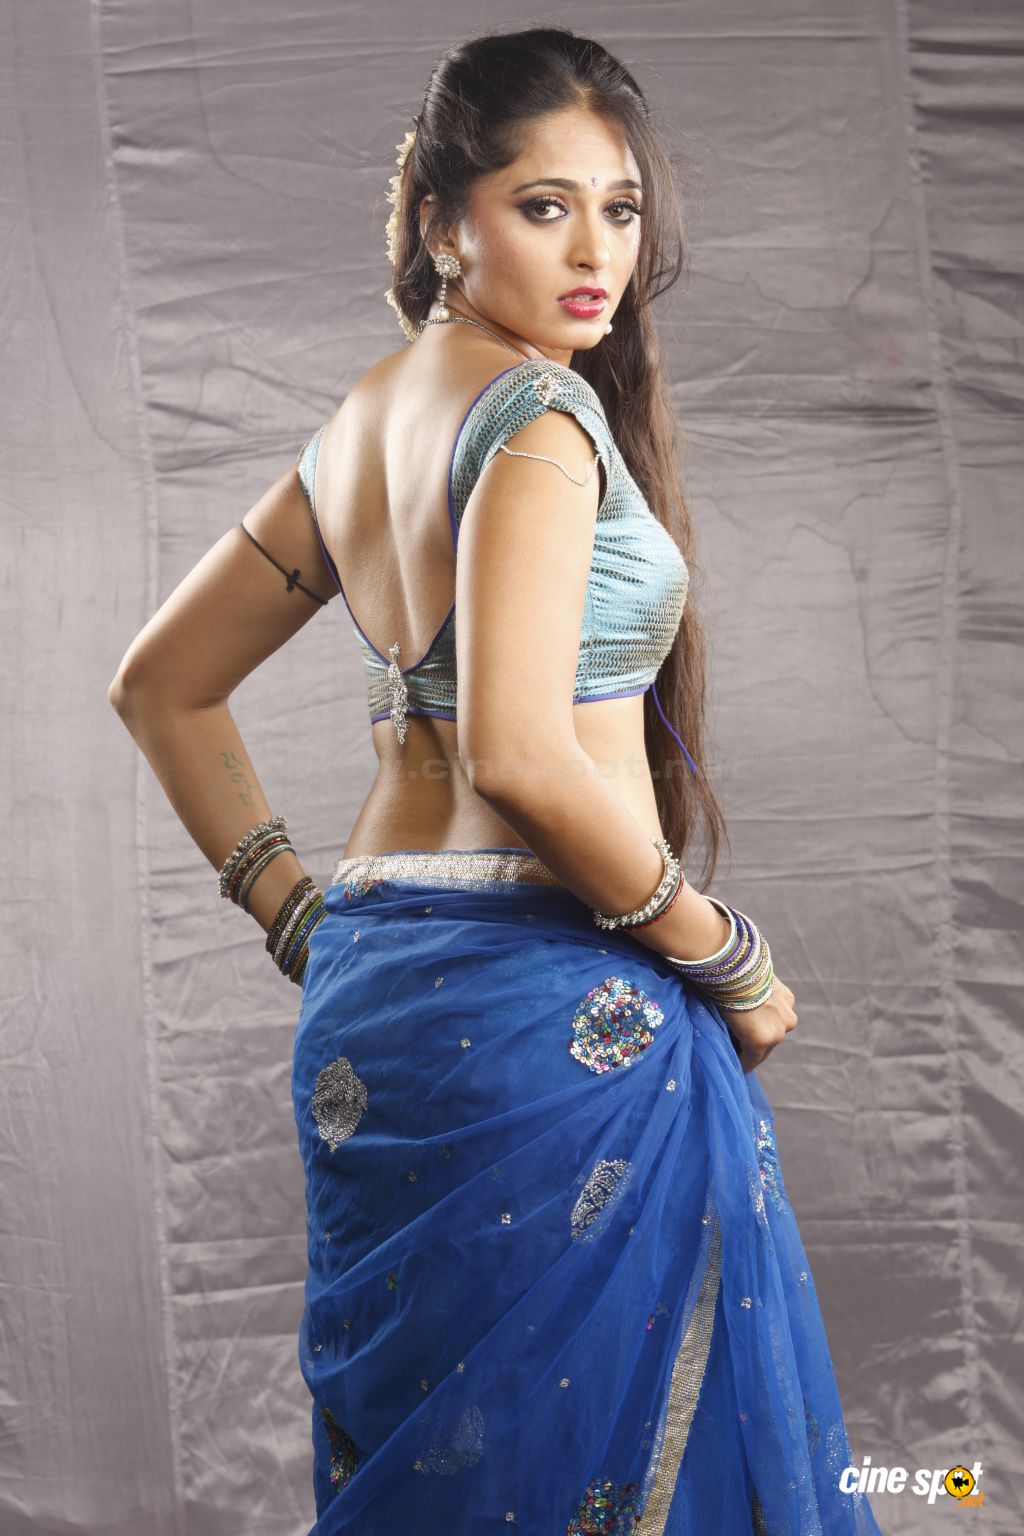 Anushka Shetty Xnxx - Anushka Shetty Interview, Videos - Bollywood Hungama